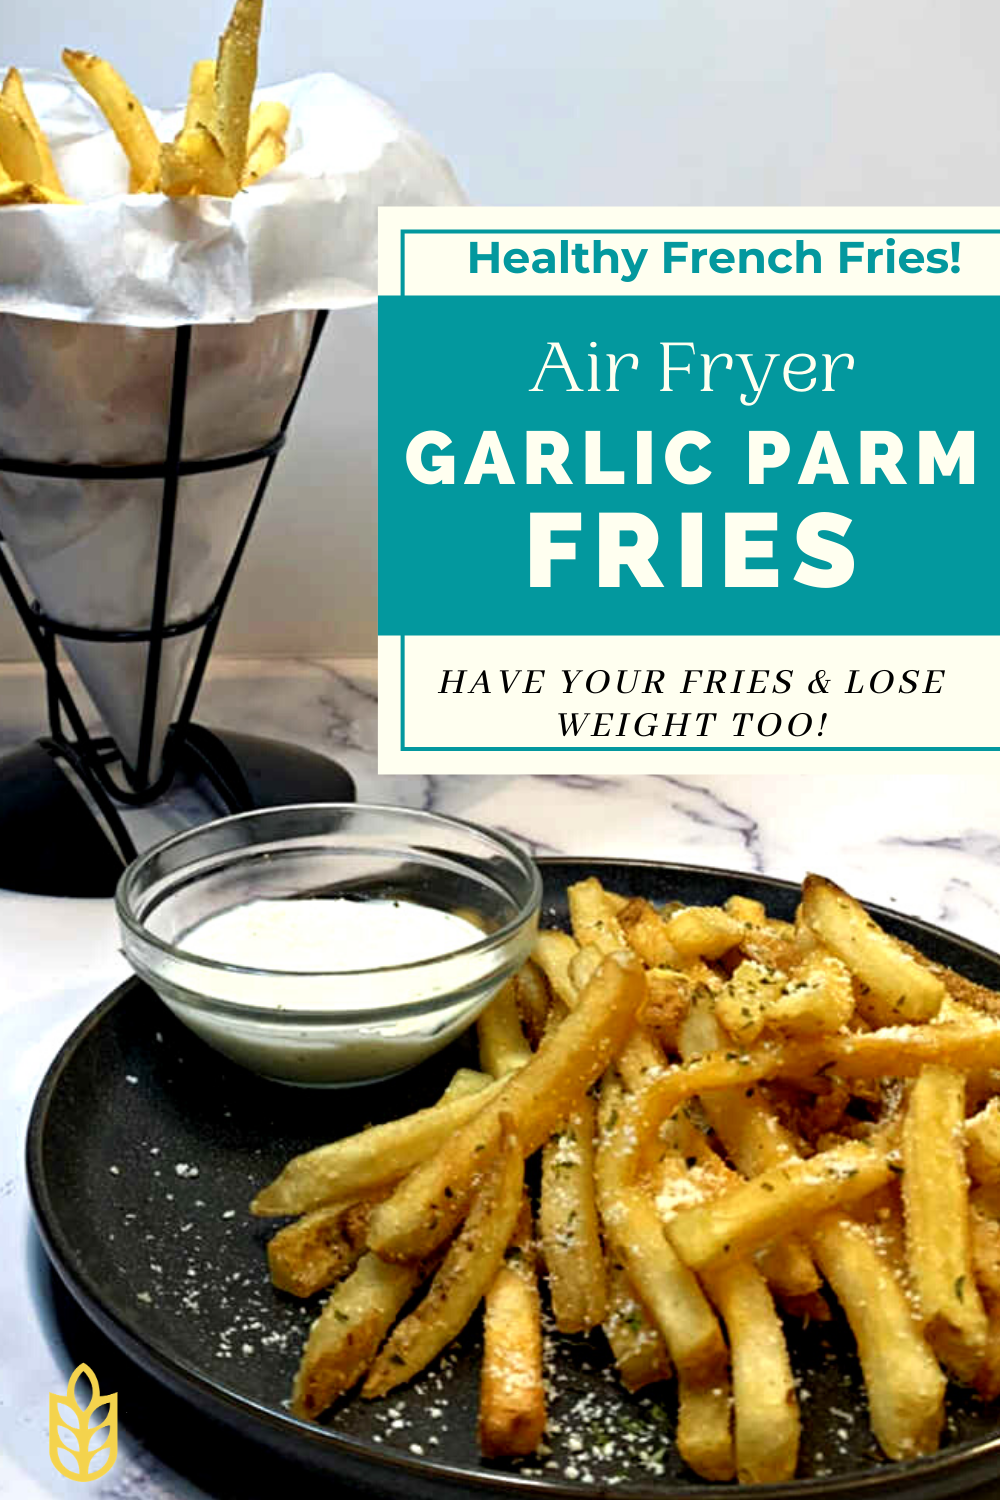 Air Fryer Garlic Parm Fries Image